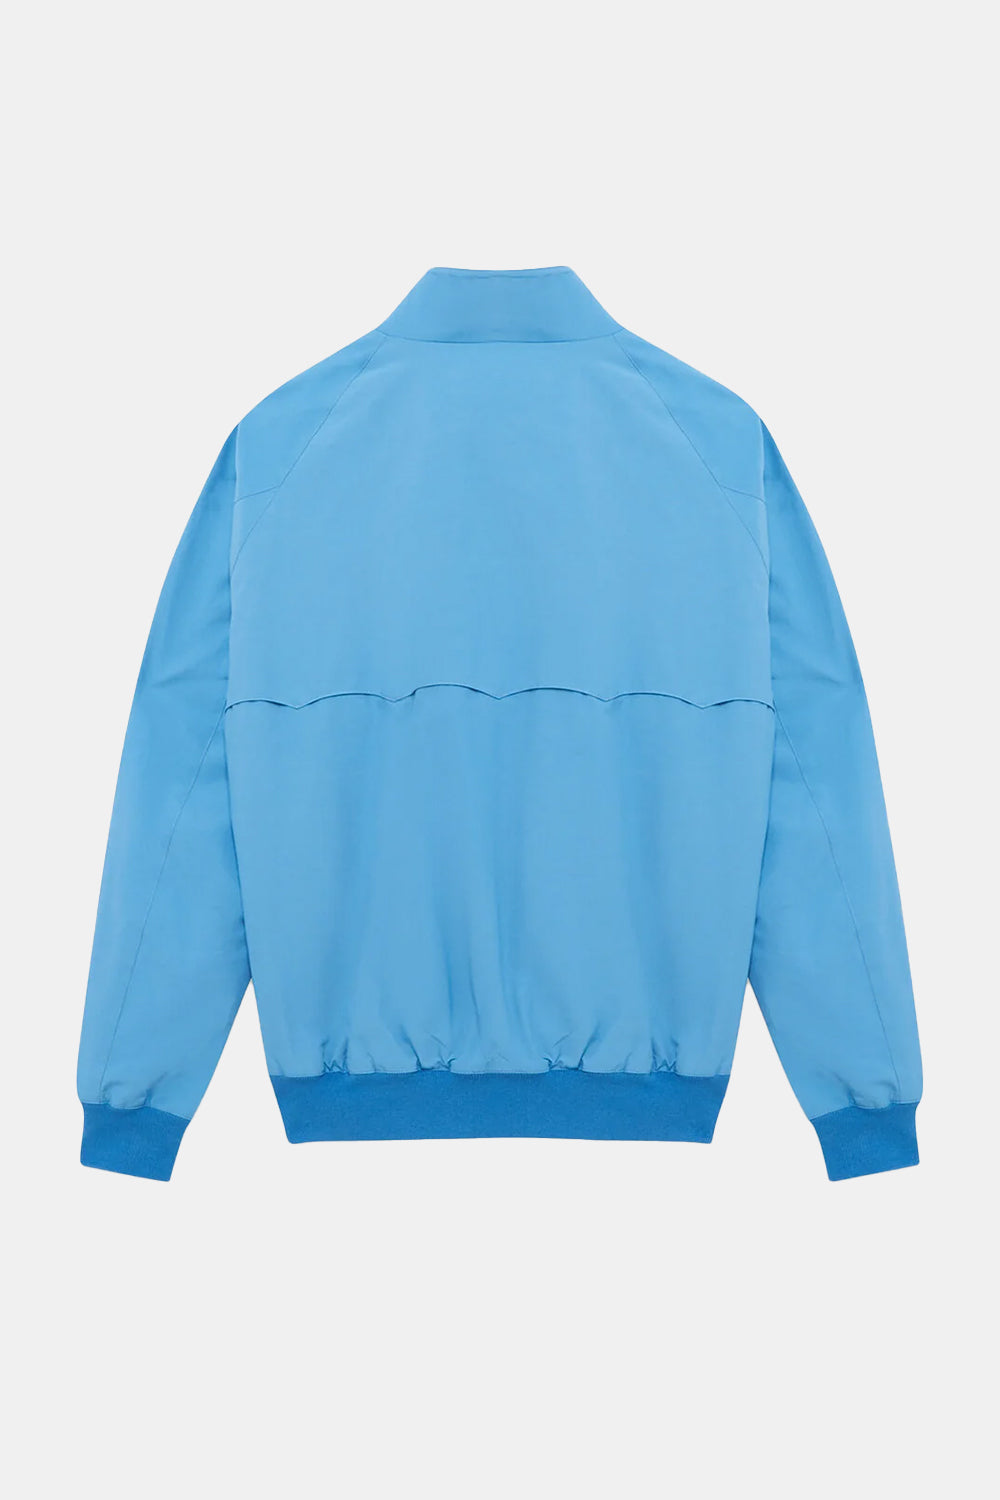 Baracuta G9 Classic Cotton-Blend Harrington Jacket (Heritage Blue)
